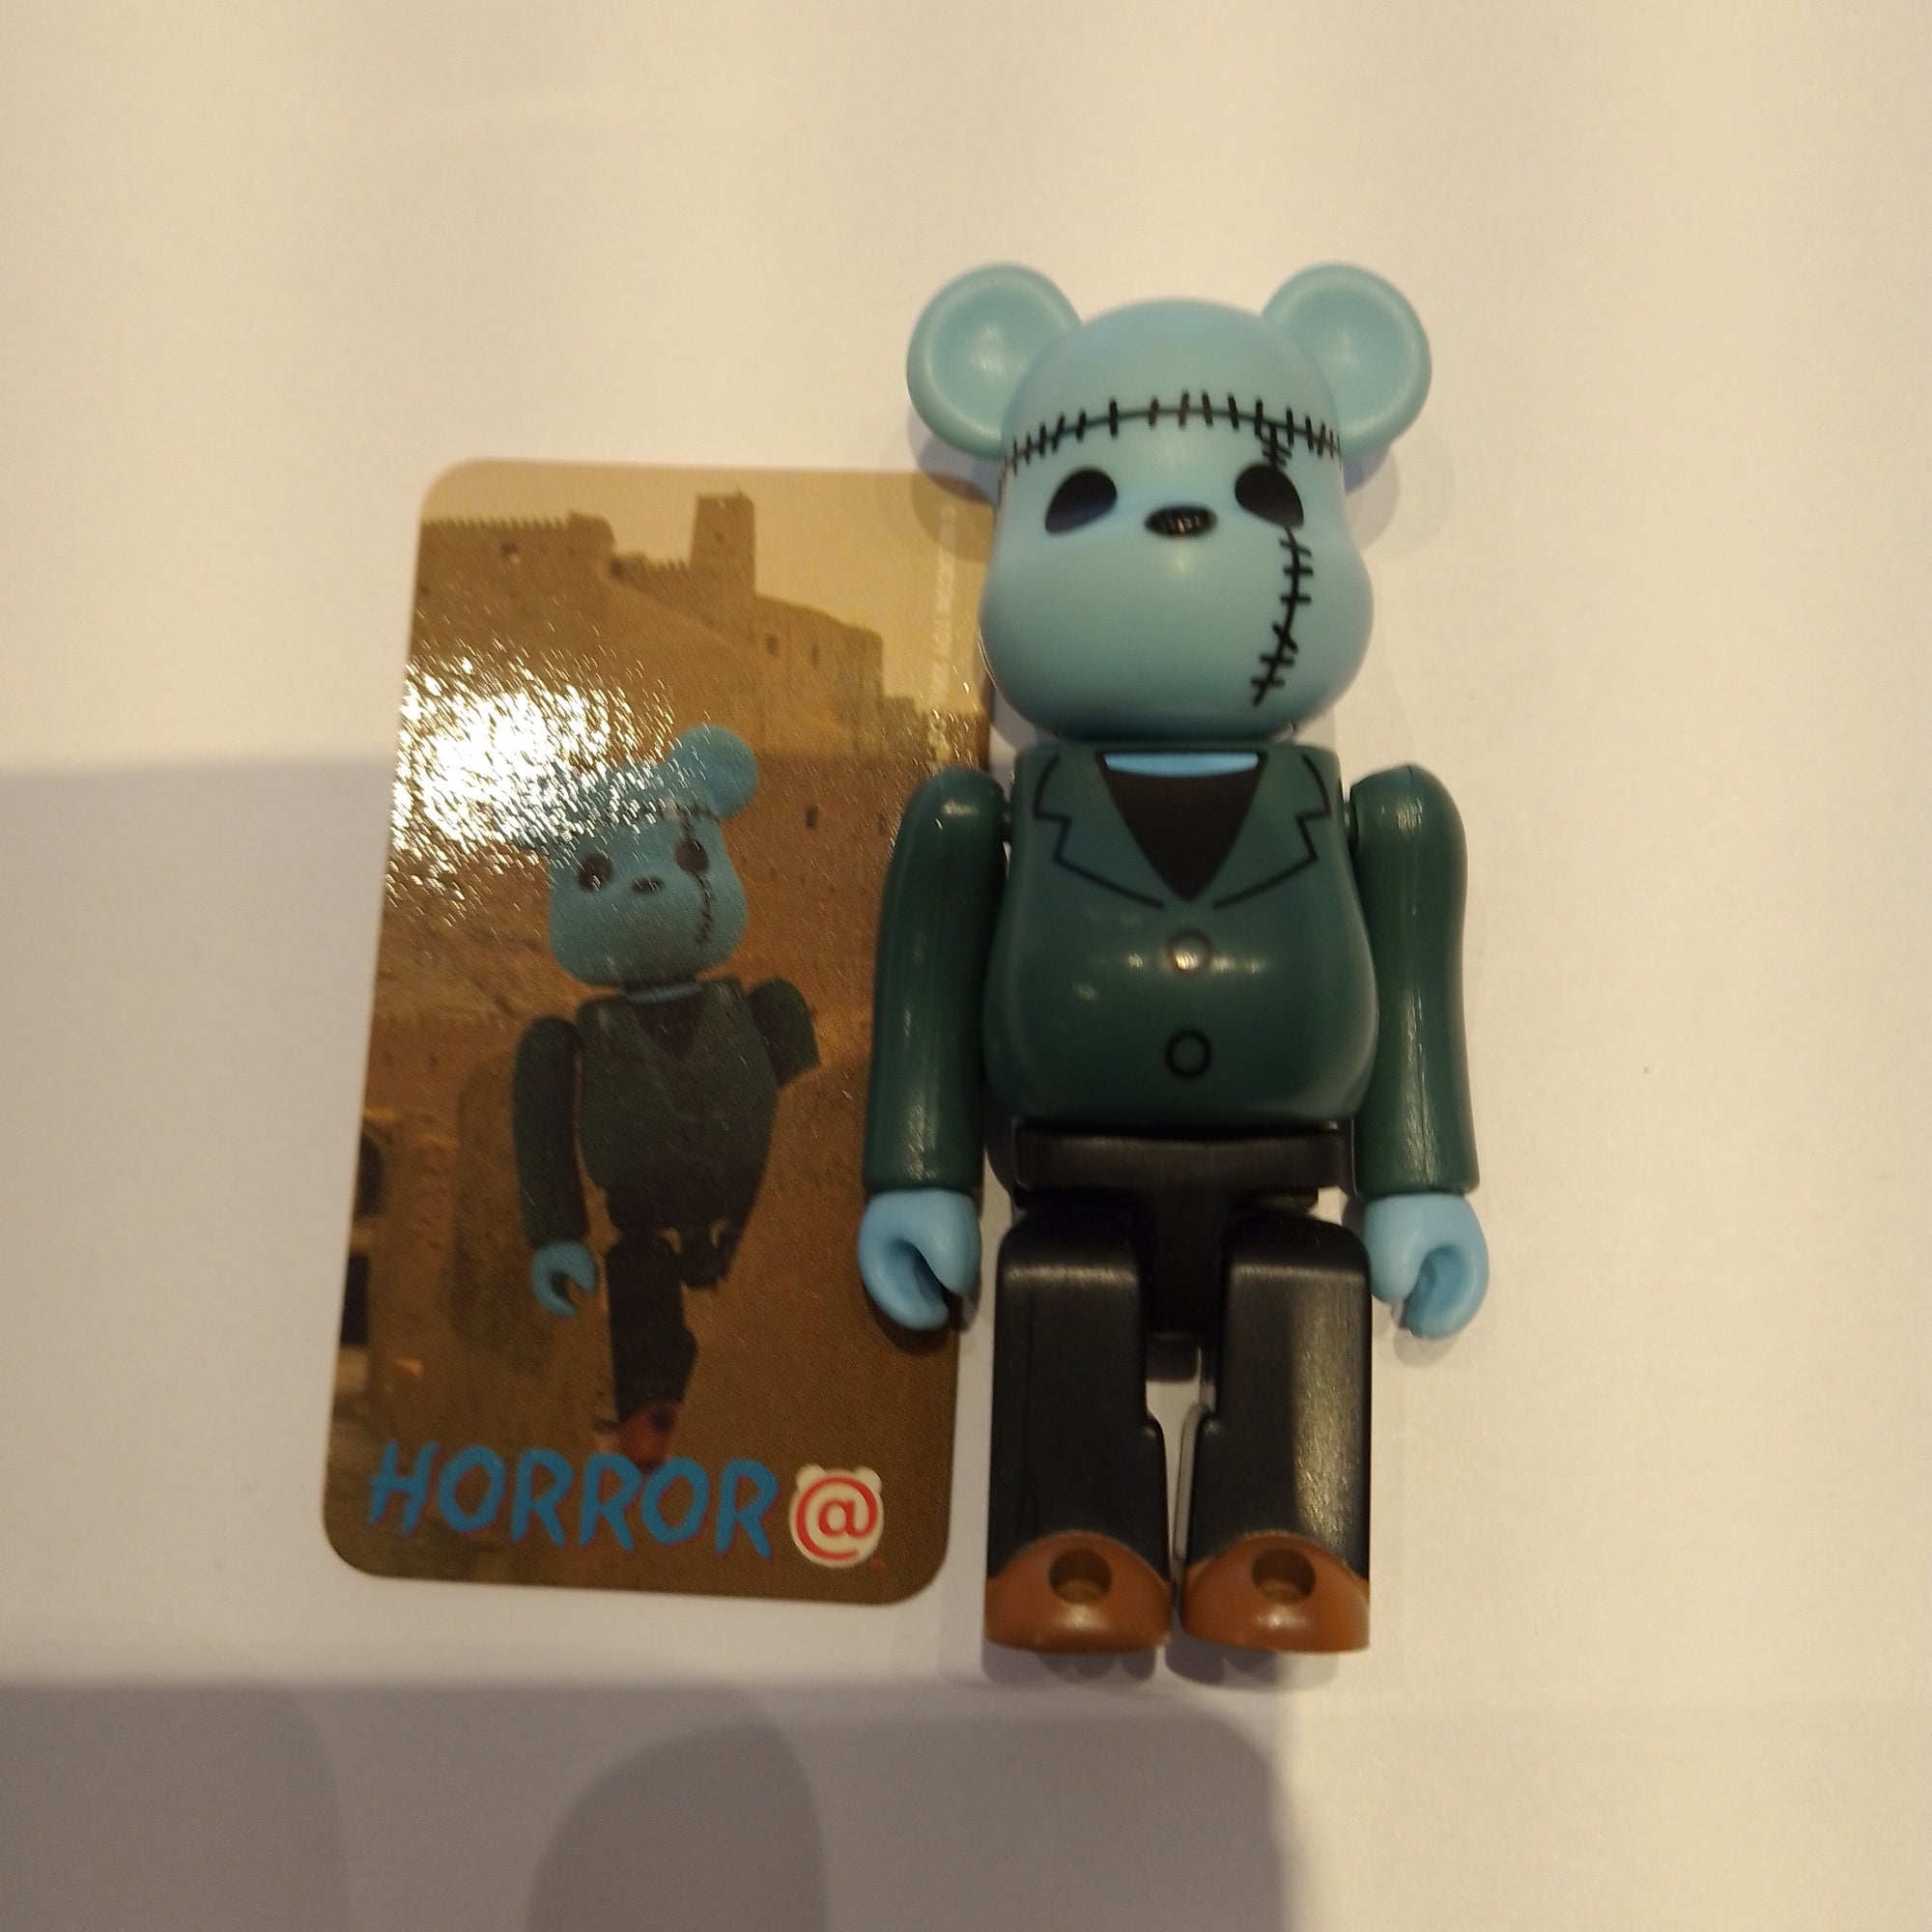 Horror - Bearbrick Series 2 by Medicom Toy